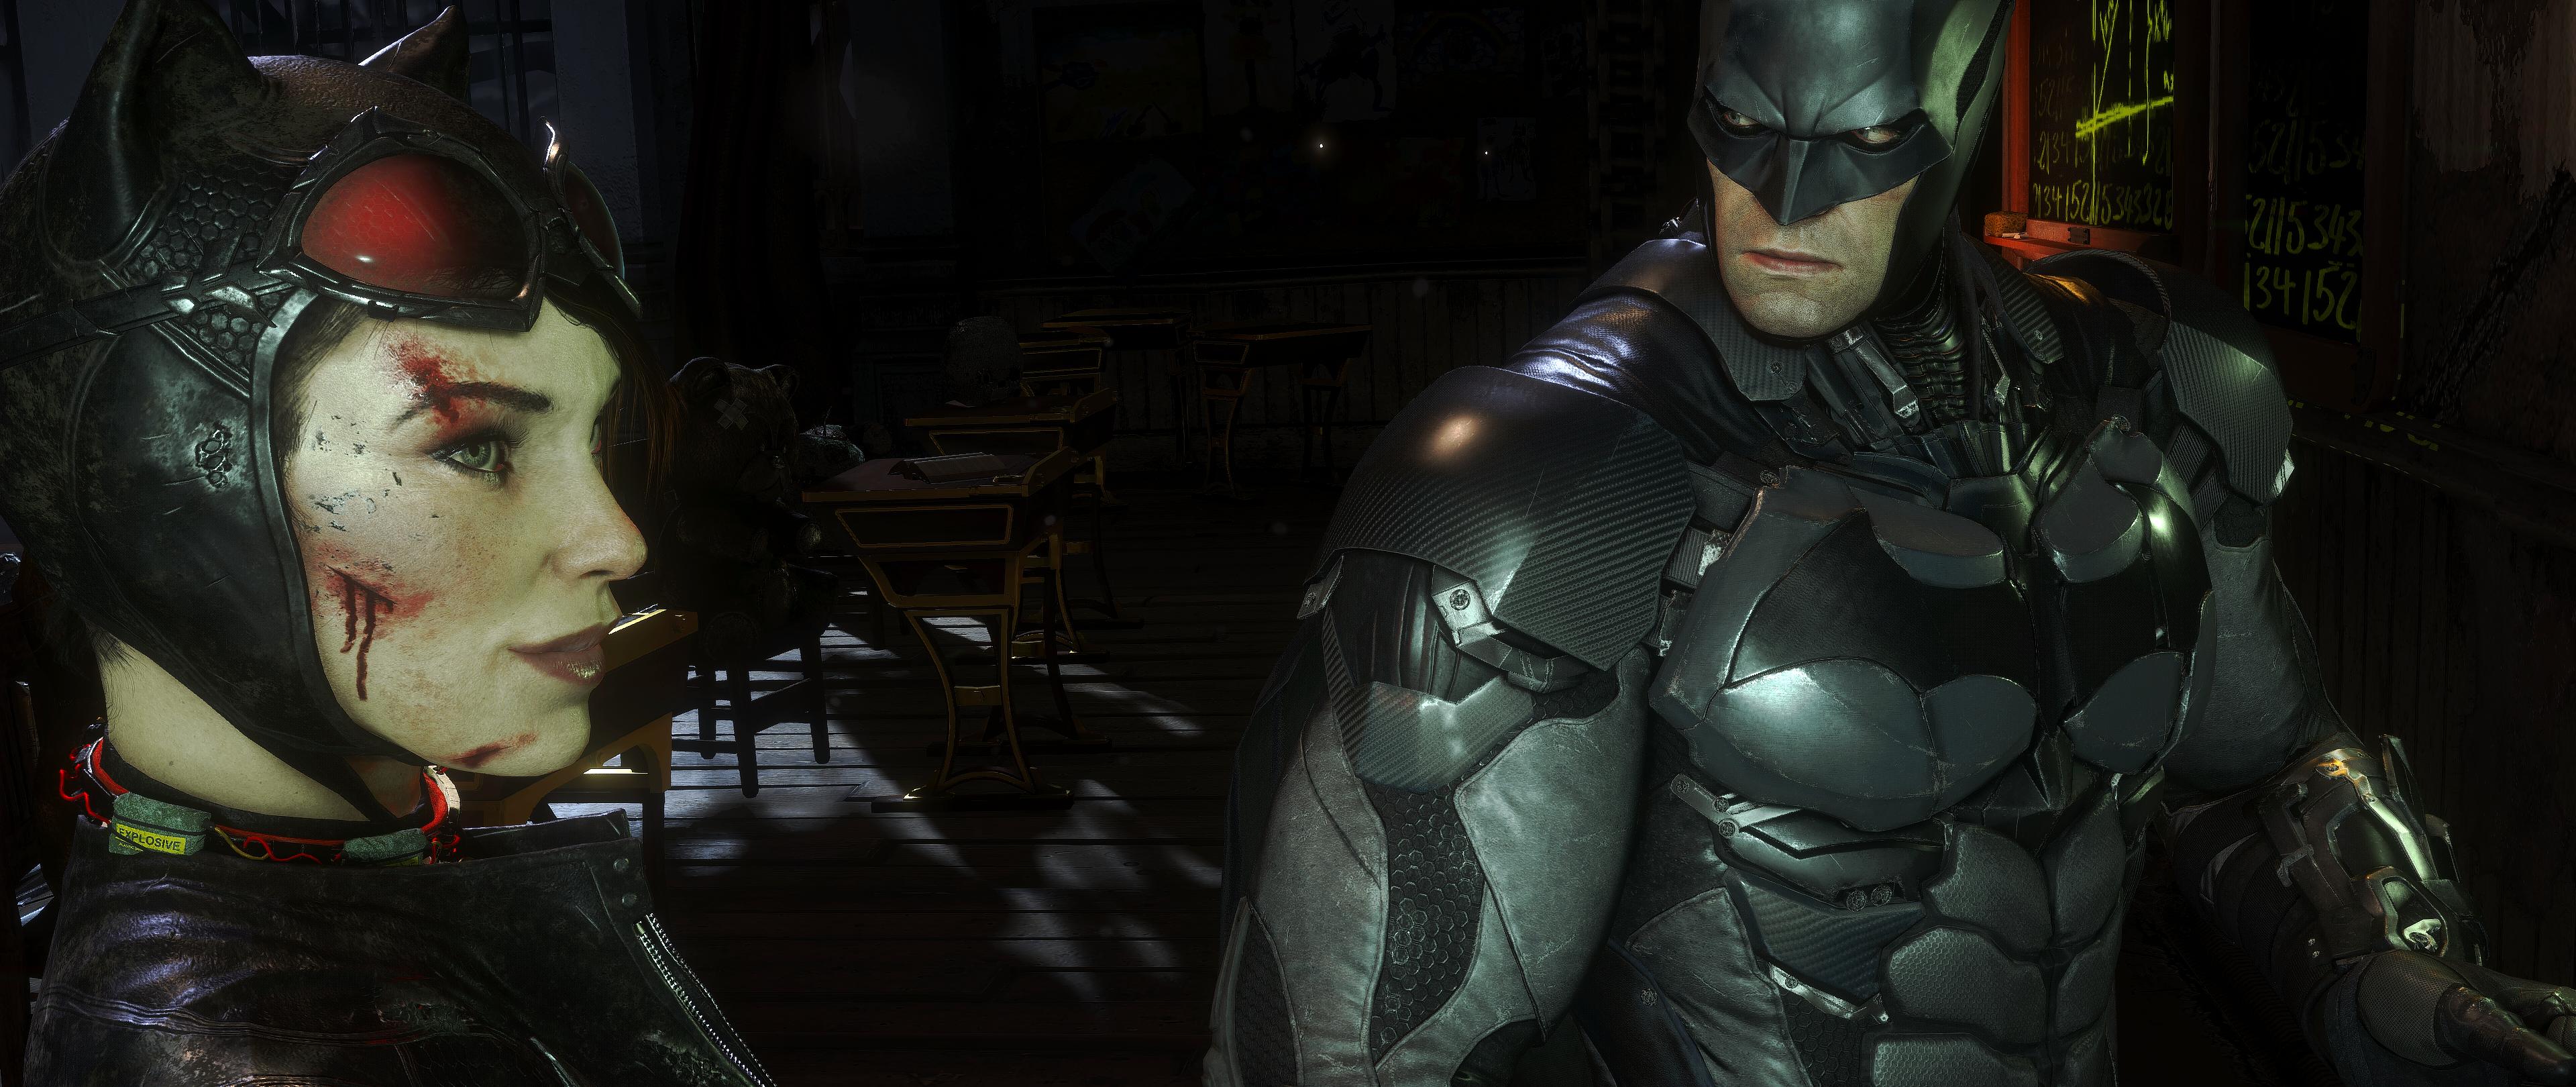 Nexus batman. Batman Arkham Knight Mods. Batman Arkham Knight Graphics. Batman Arkham Knight персонажи. Batman Arkham Knight падение рыцаря.